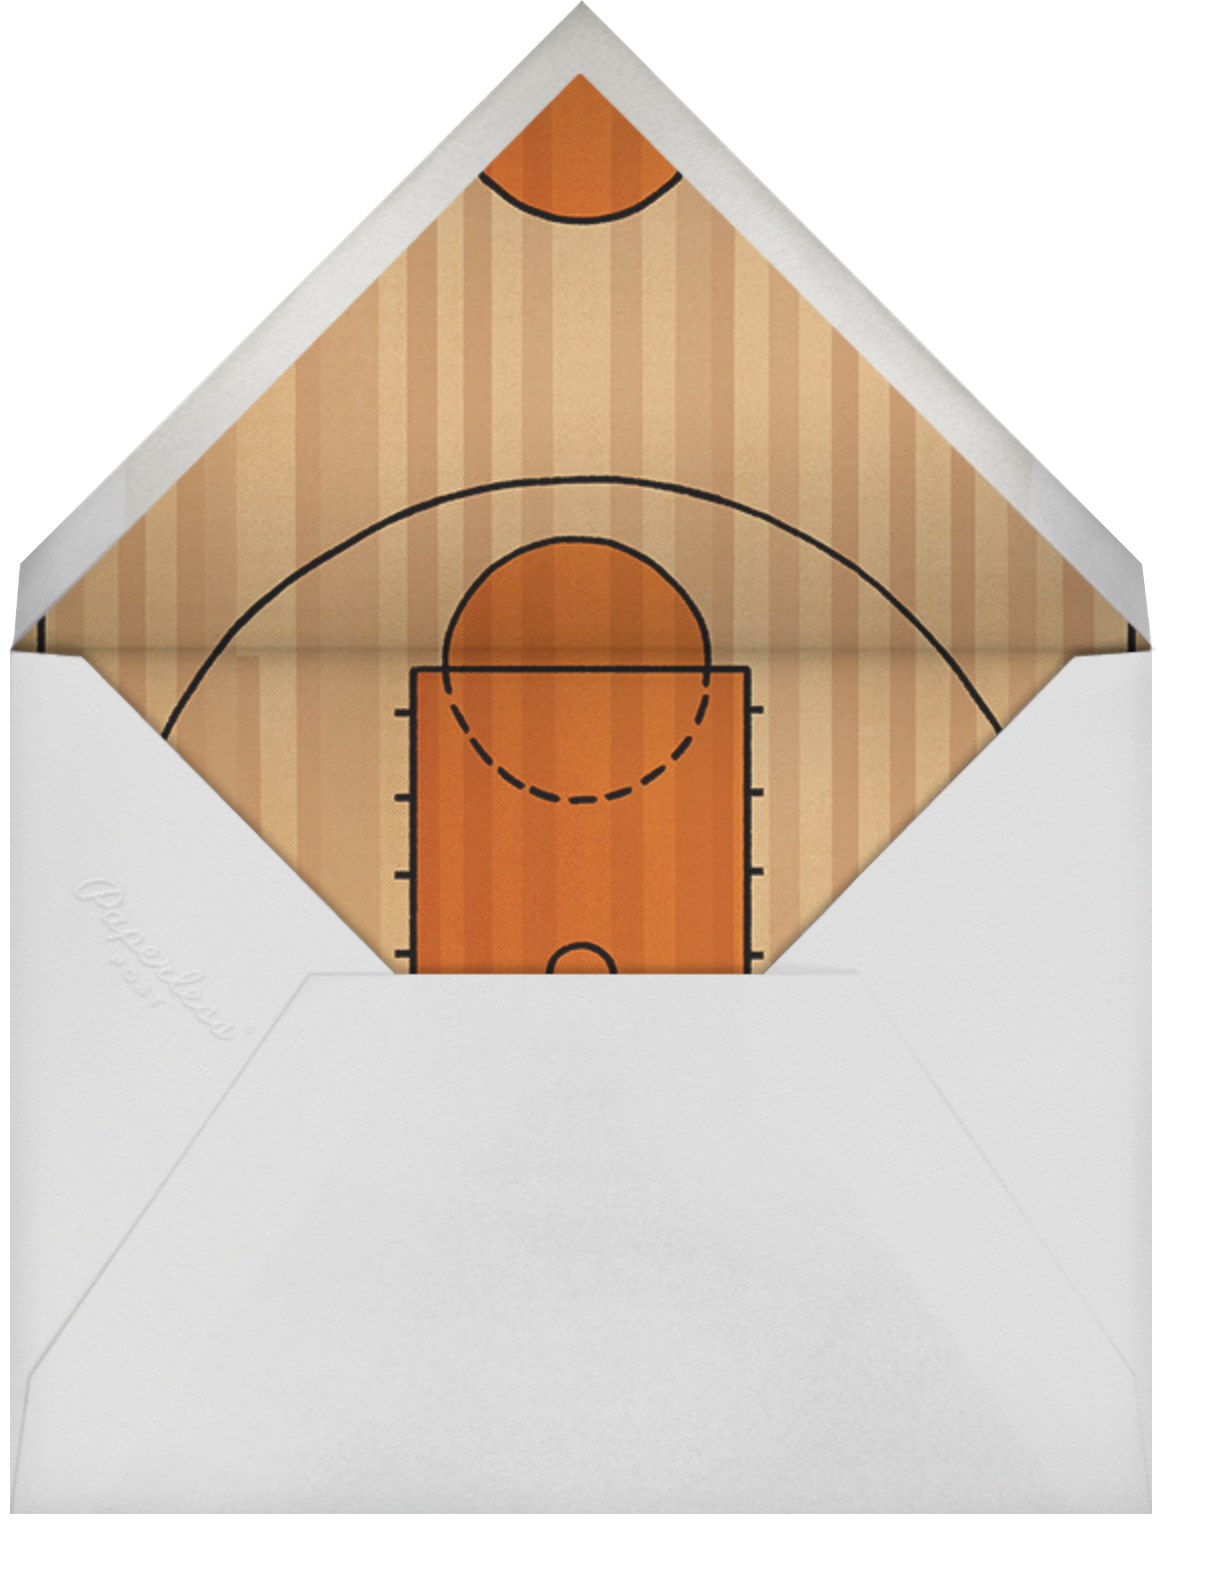 Courtside Seats - Basketball - Paperless Post - Envelope